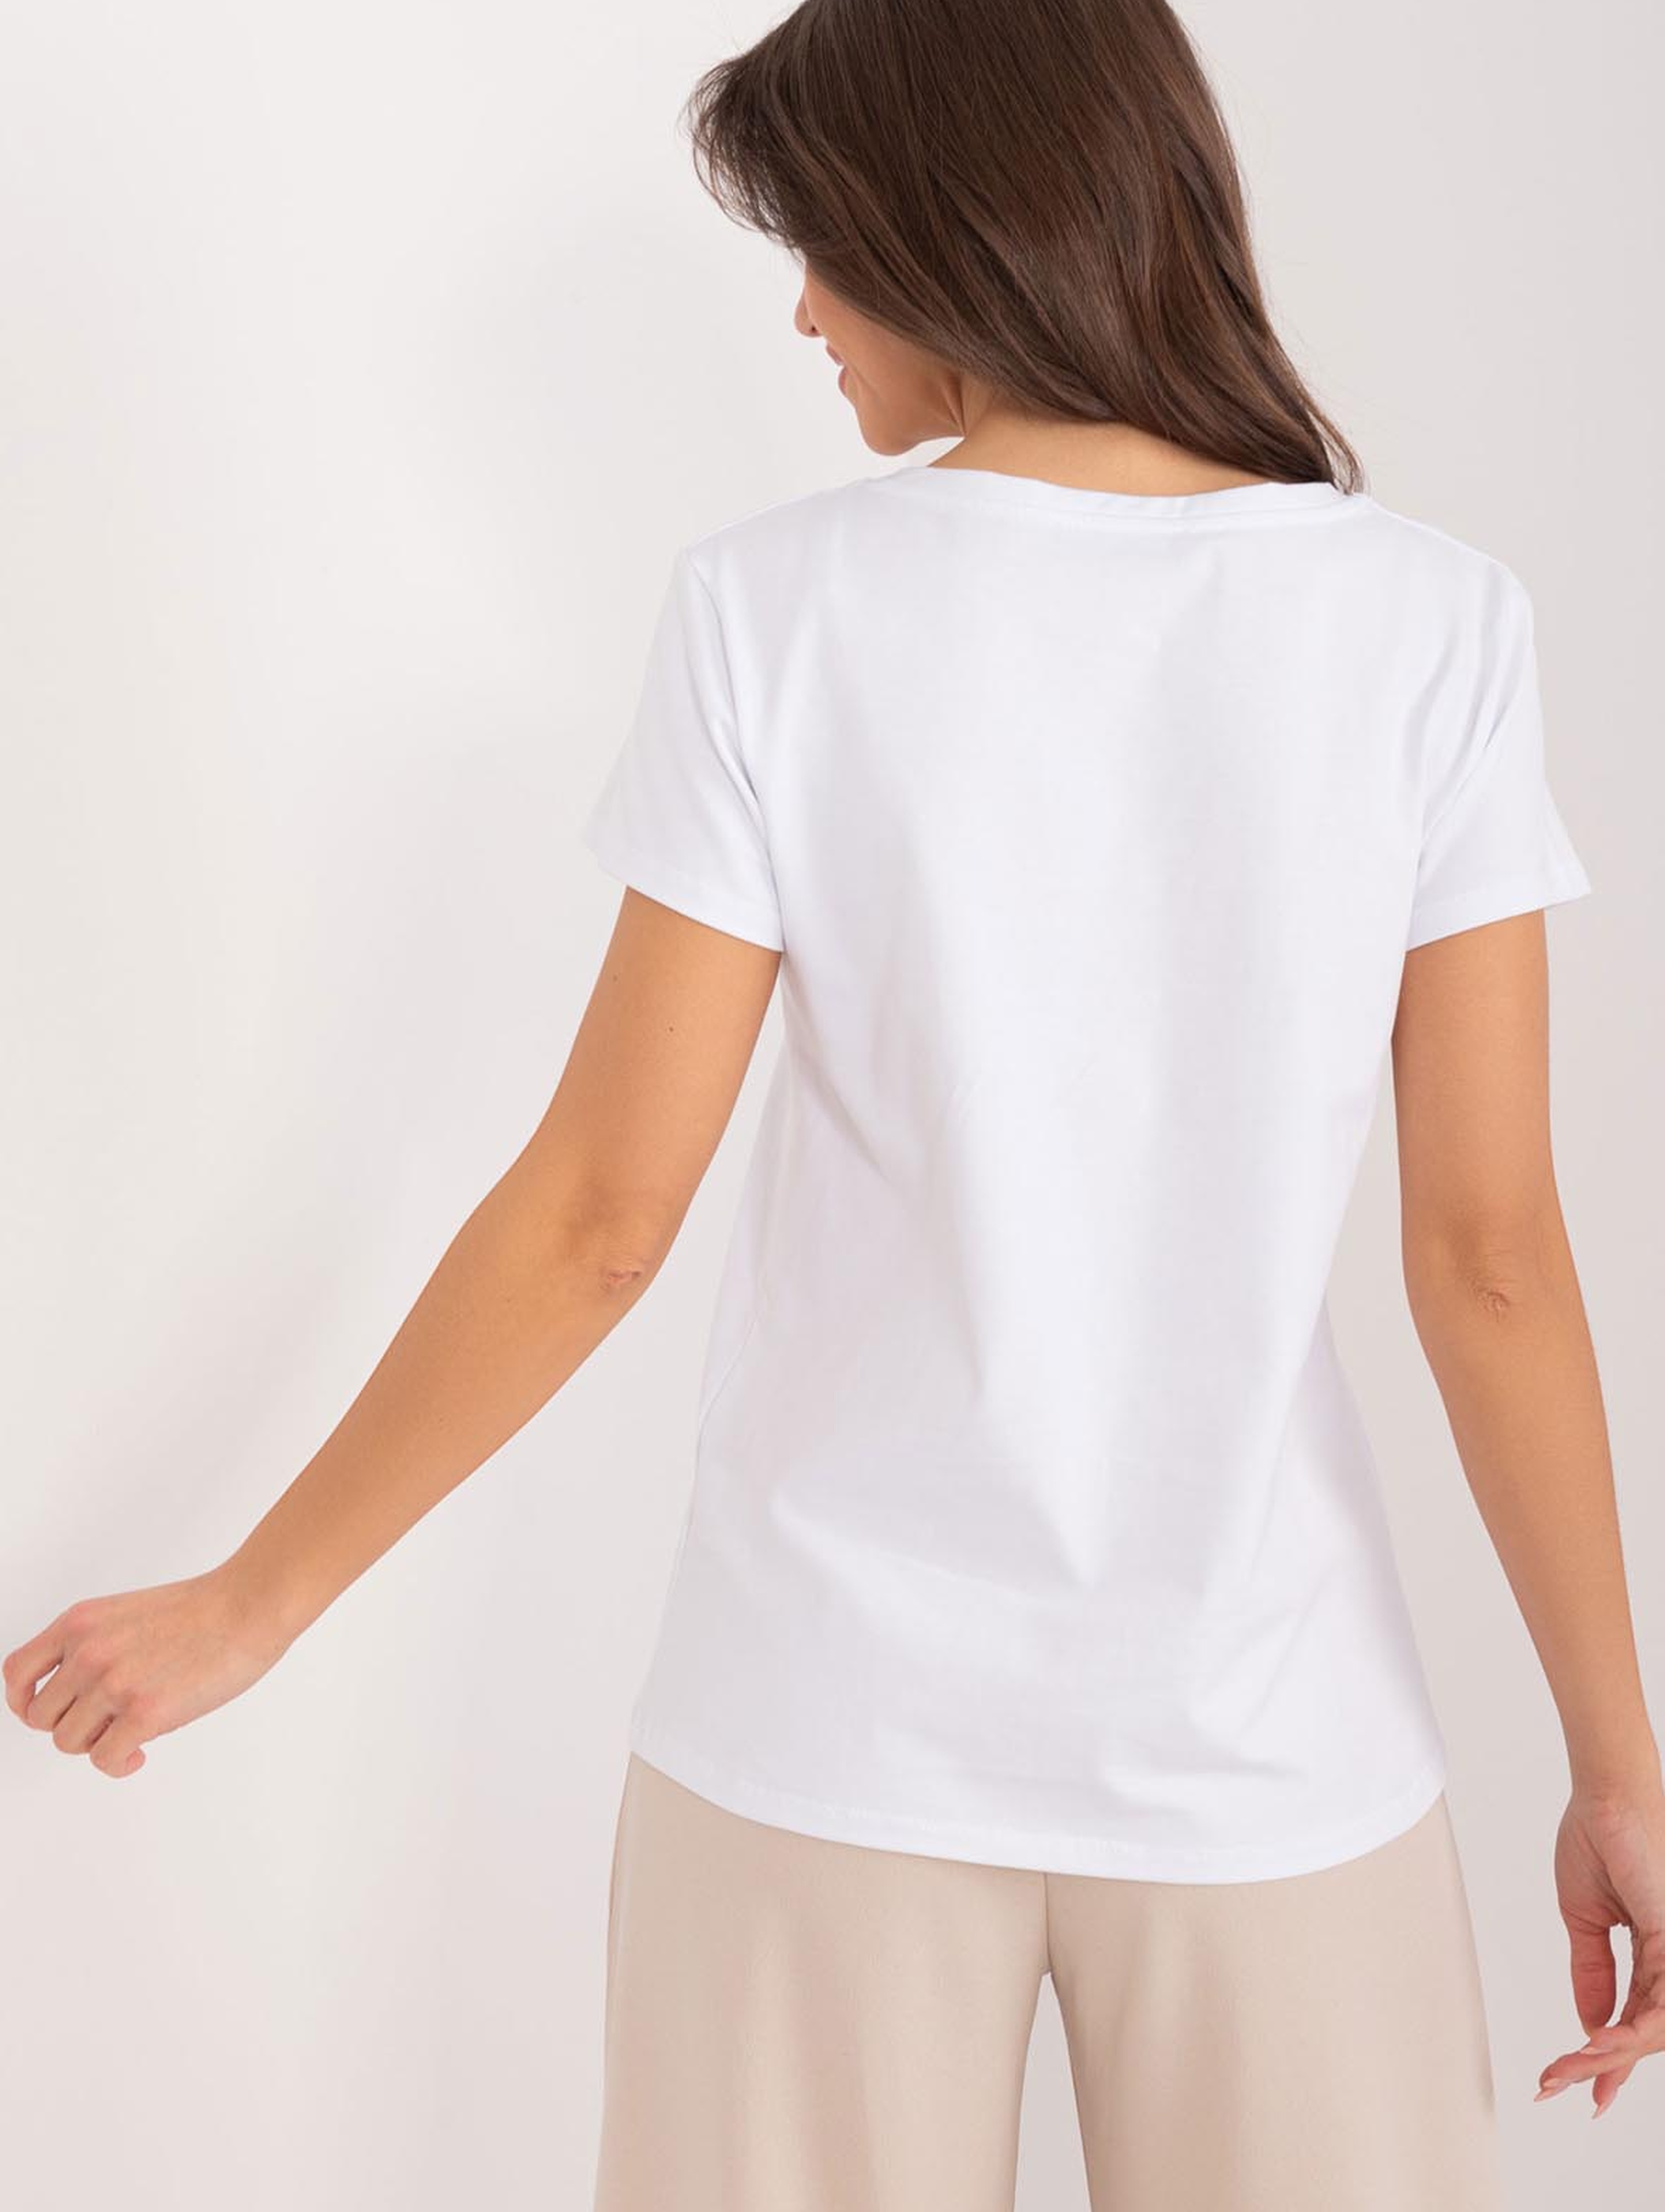 T-Shirt z printem Basic Feel Good biało-beżowy